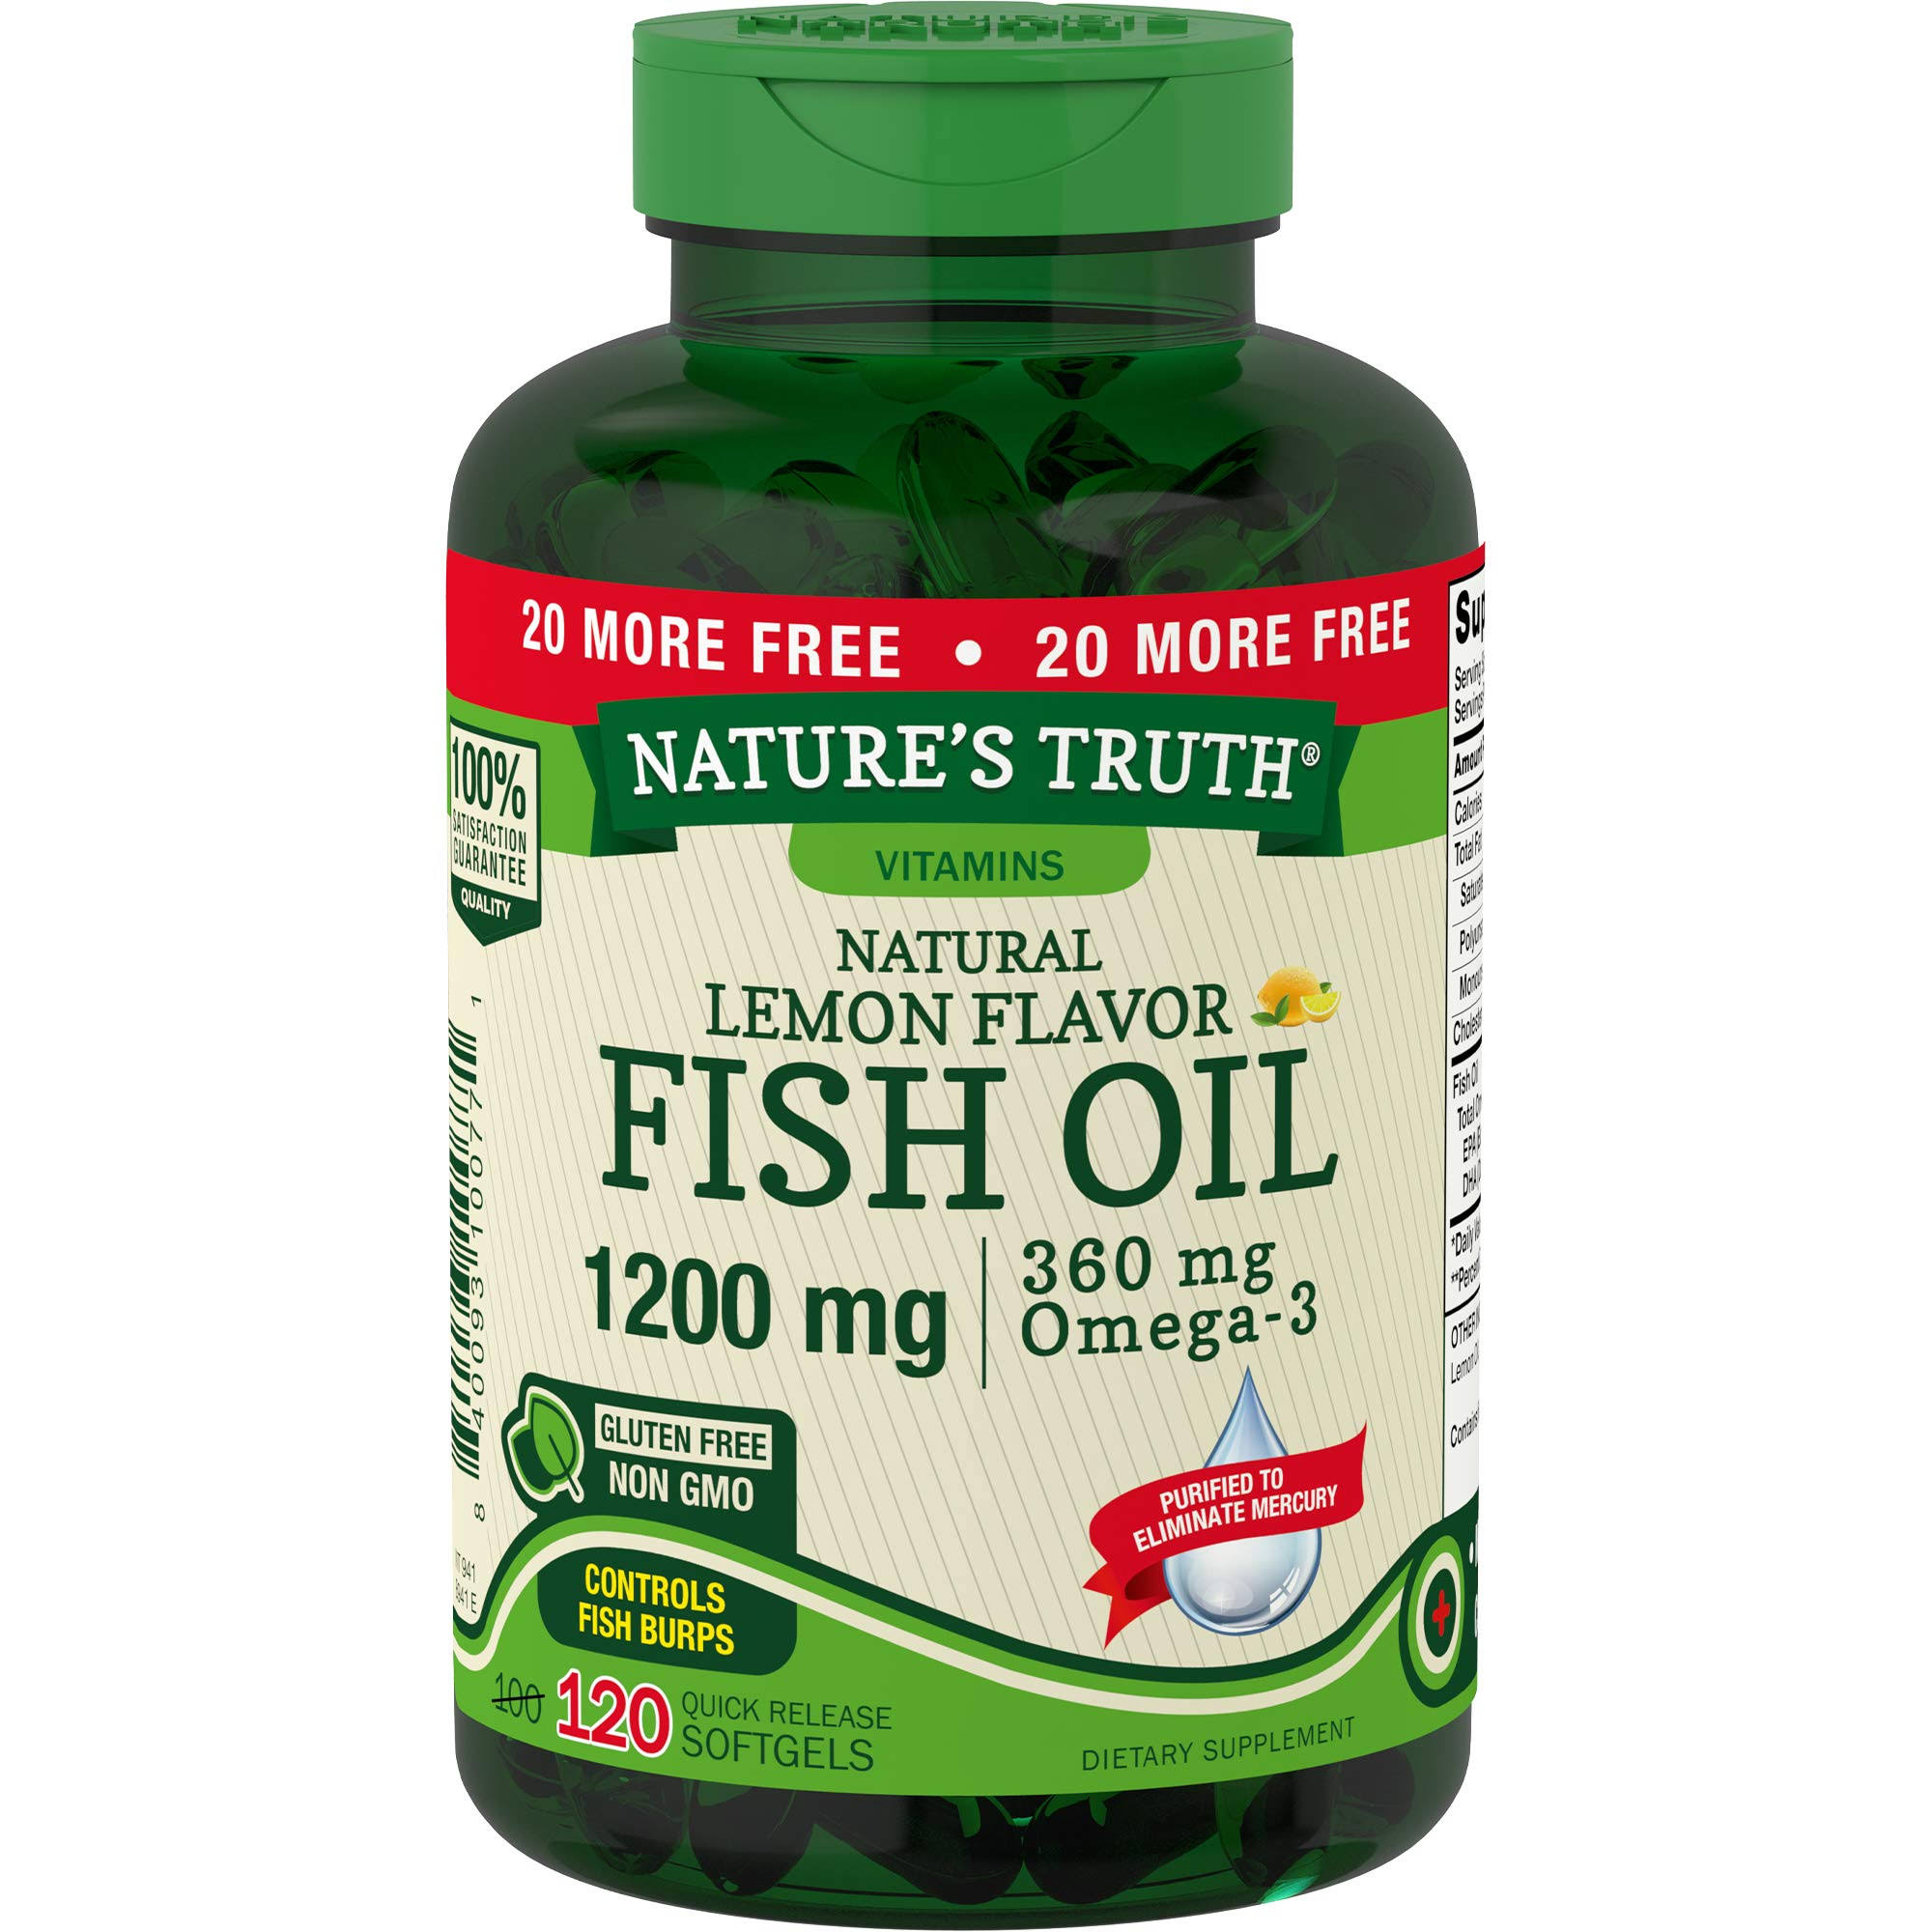 Nature's Truth 1200 Mg Omega-3 Fish Oil Softgels - Lemon, 250ct